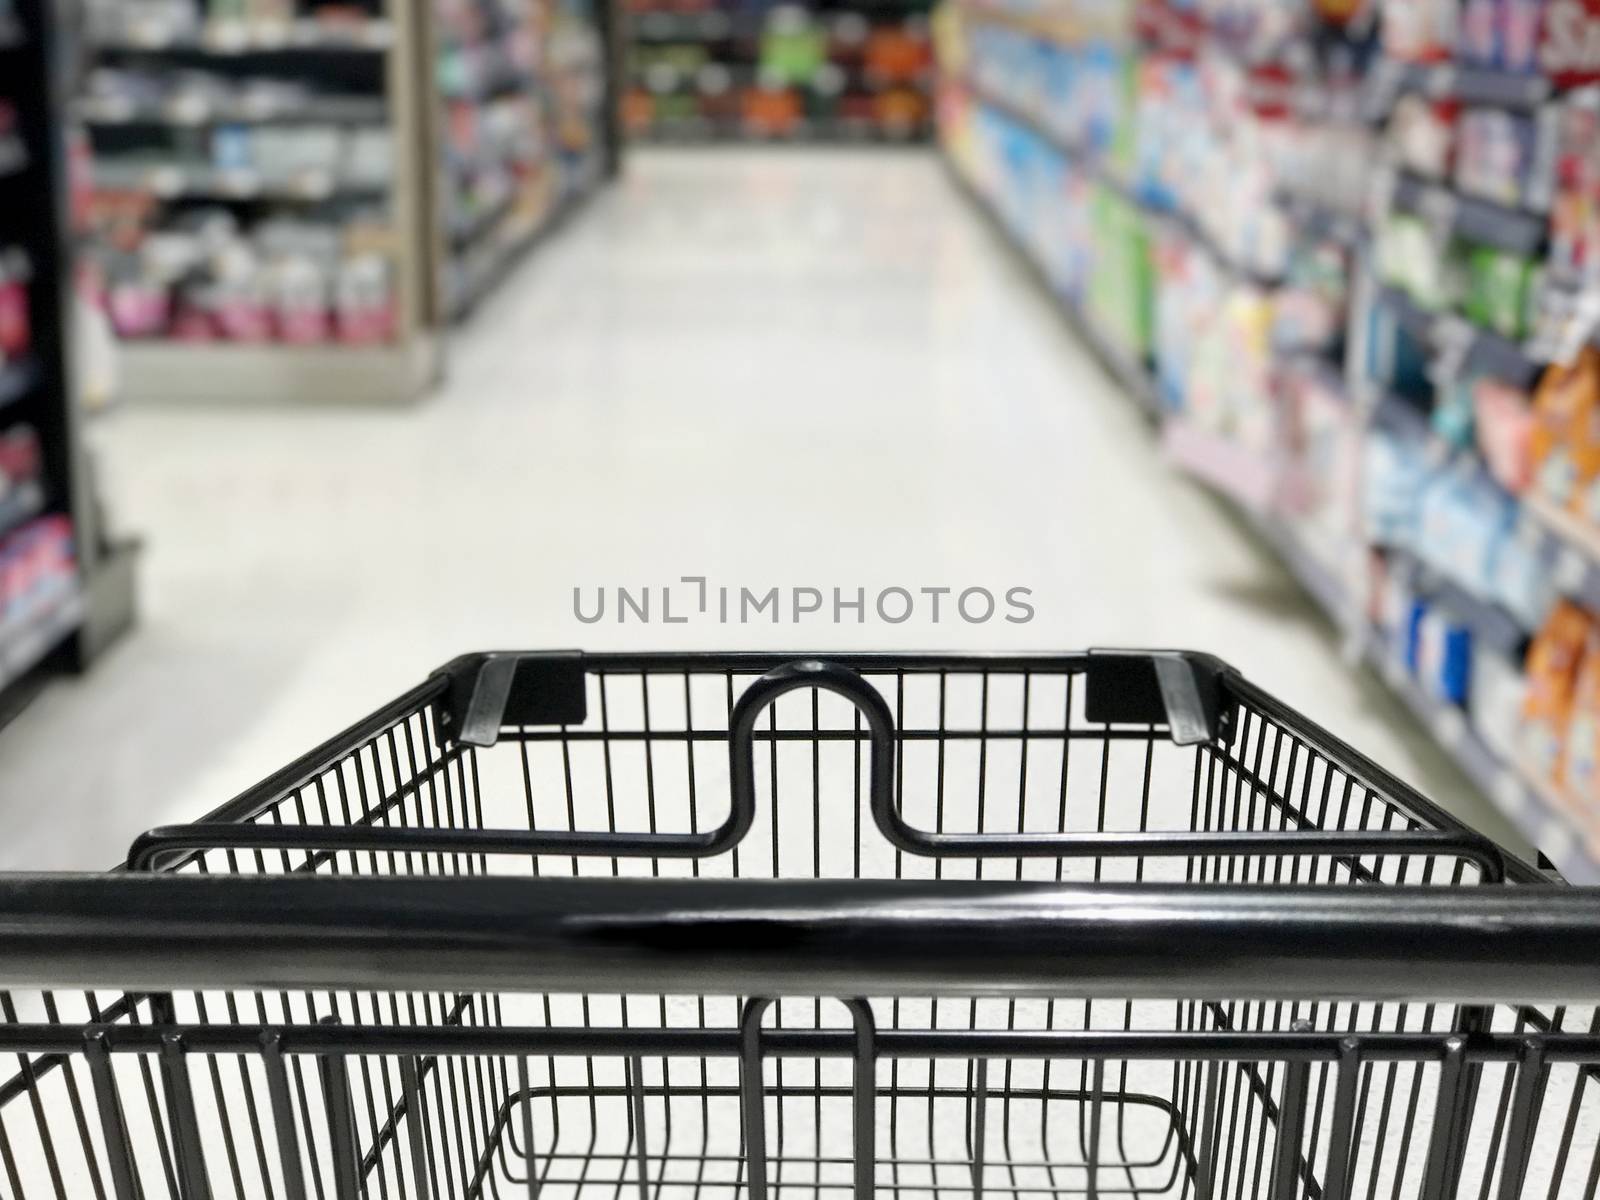 Shopping cart with wine bottles shelves in supermarket by ekachailo